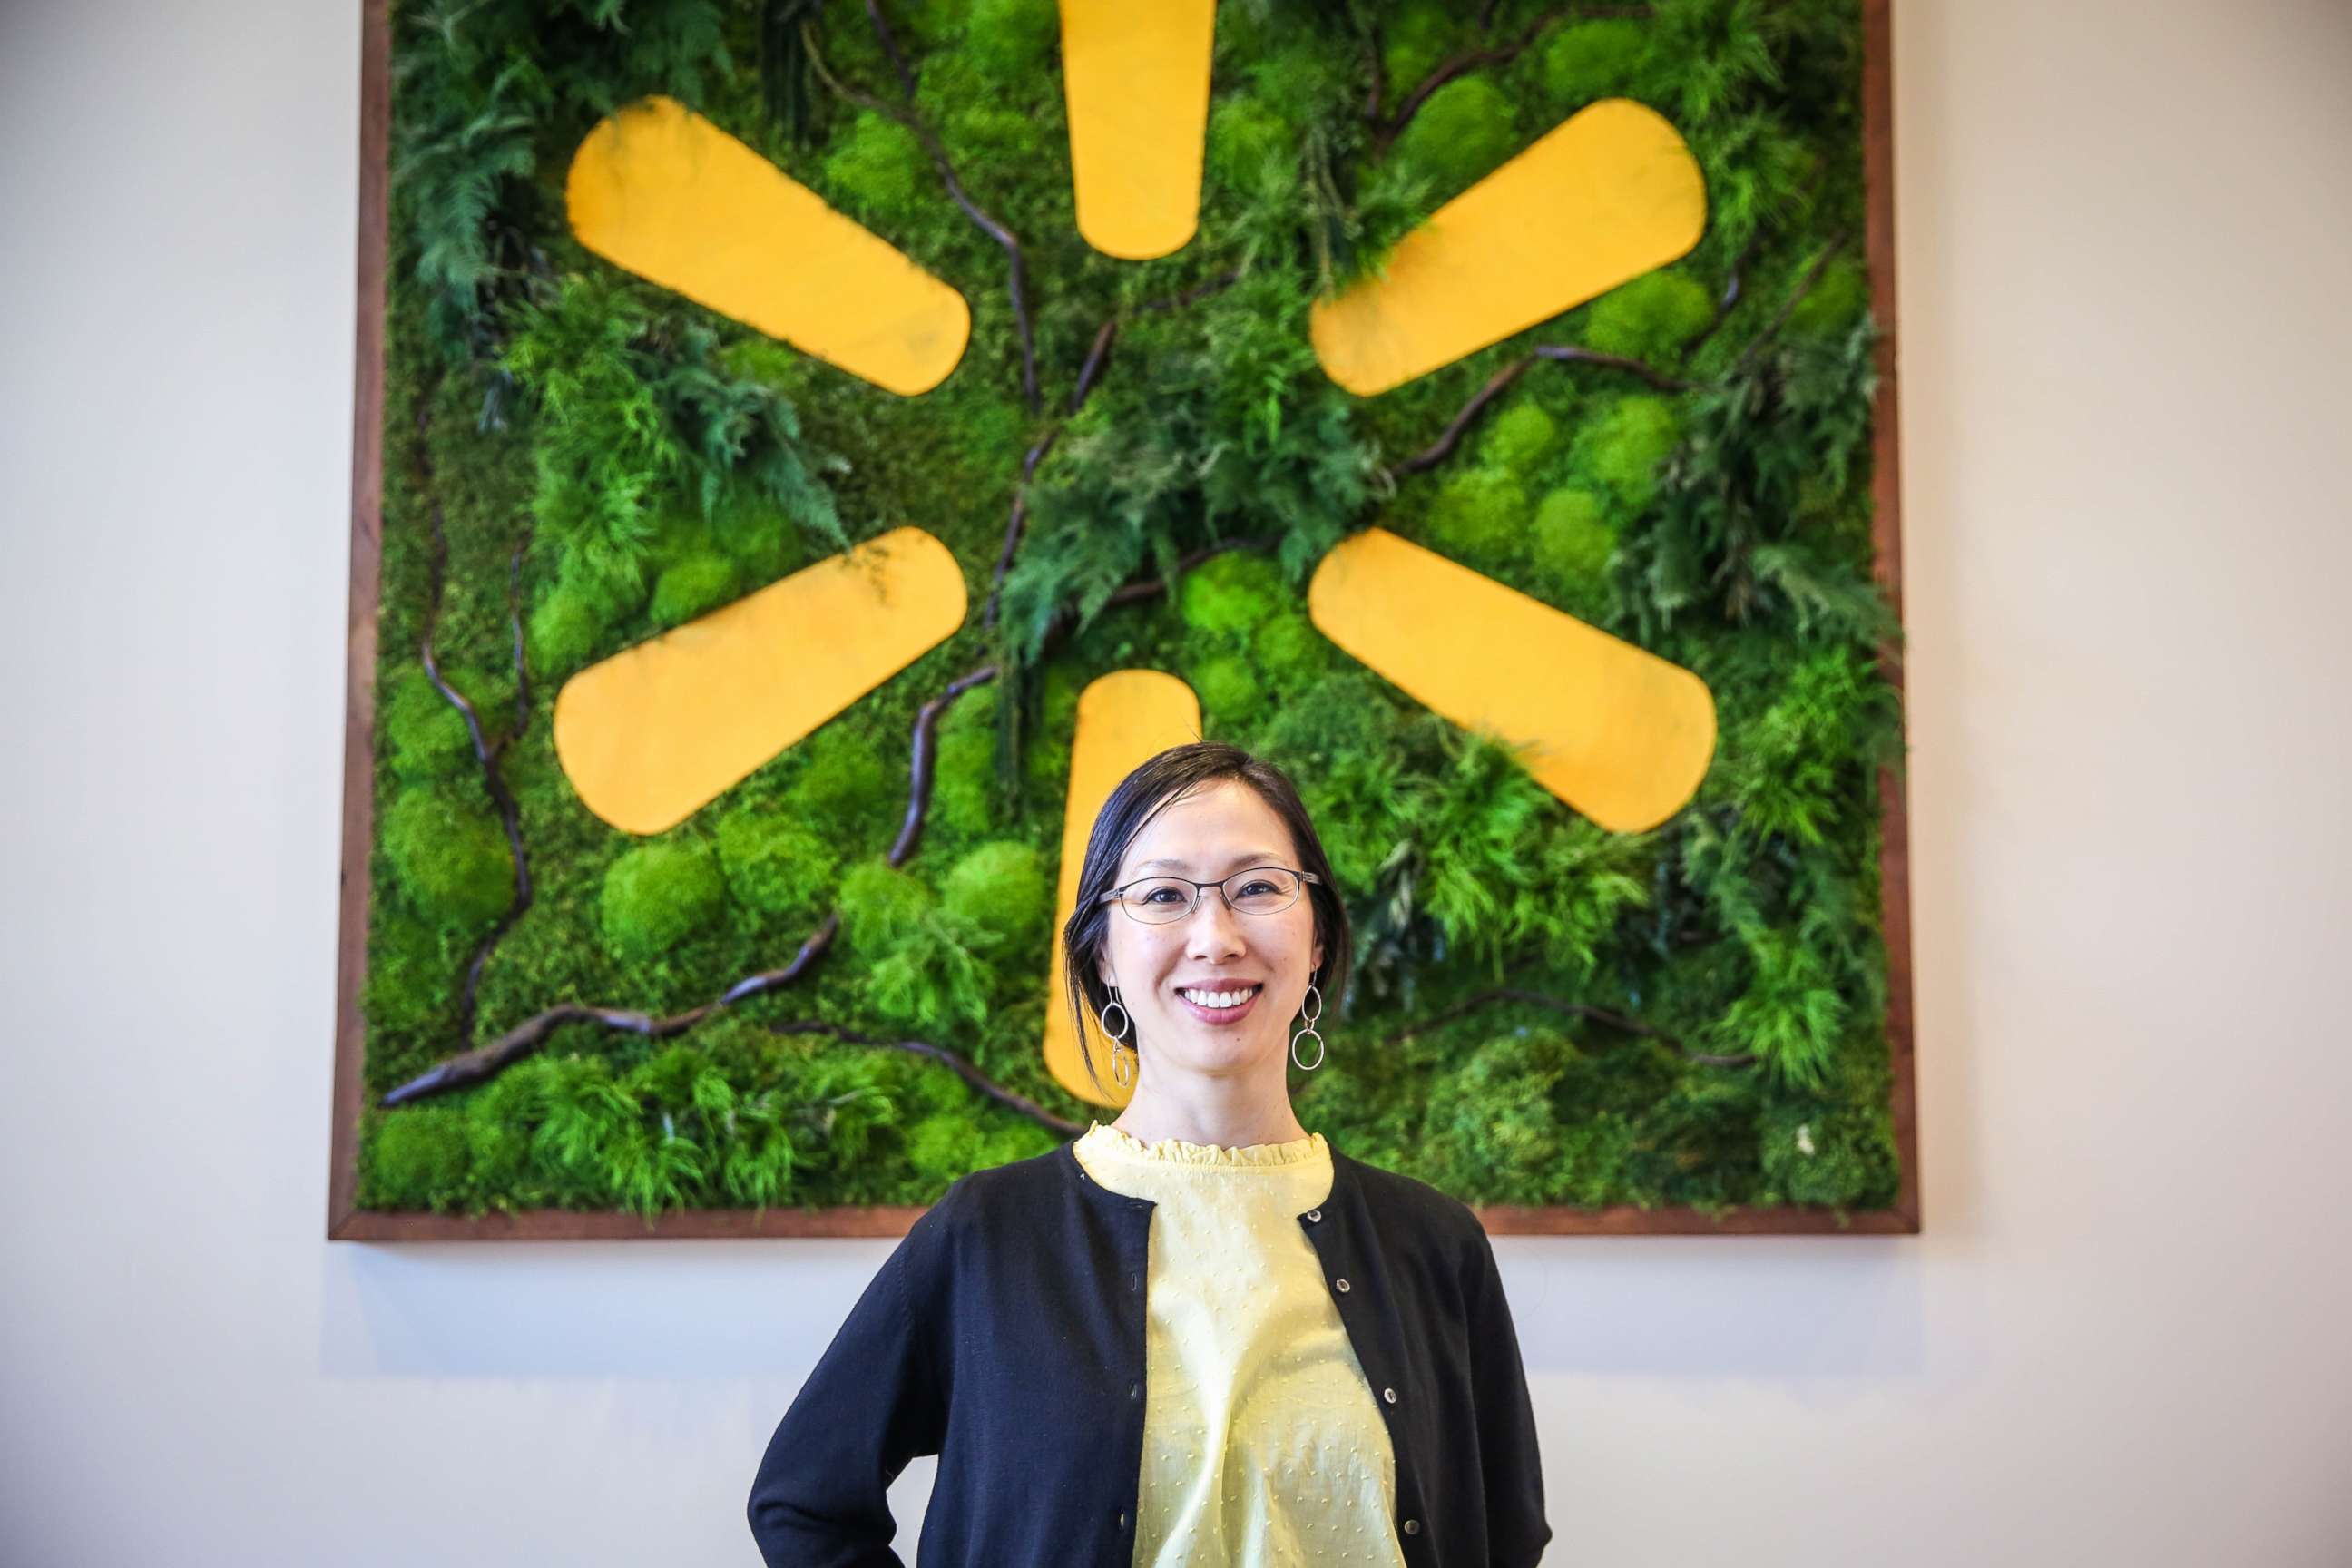 Deborah Chin returned to the workforce through a mid-career internship with Walmart.